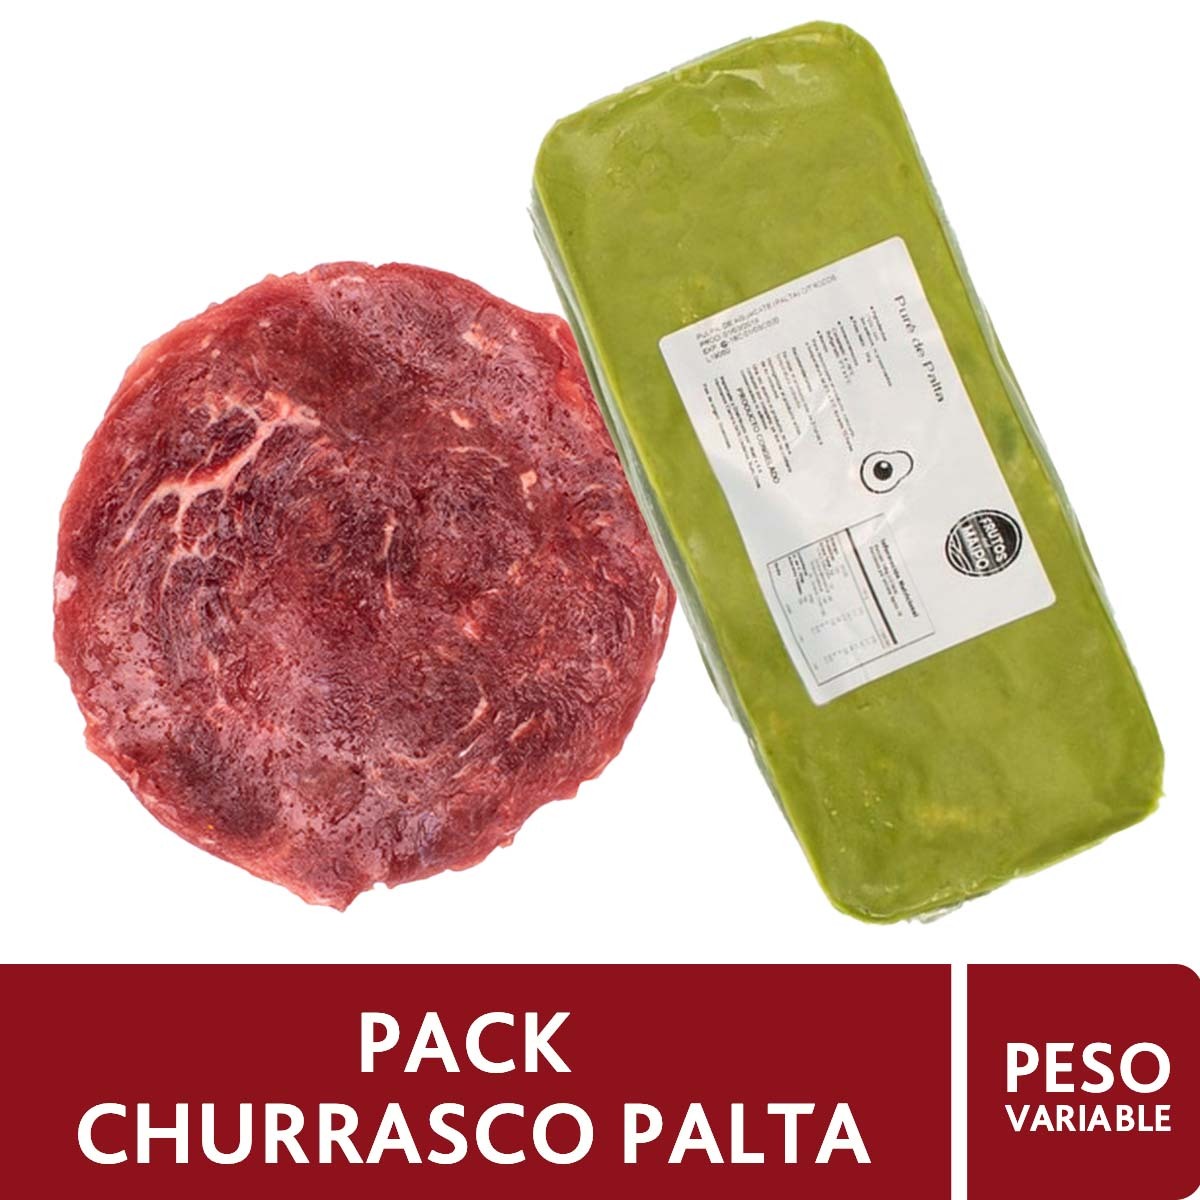 Pack Churrasco Palta